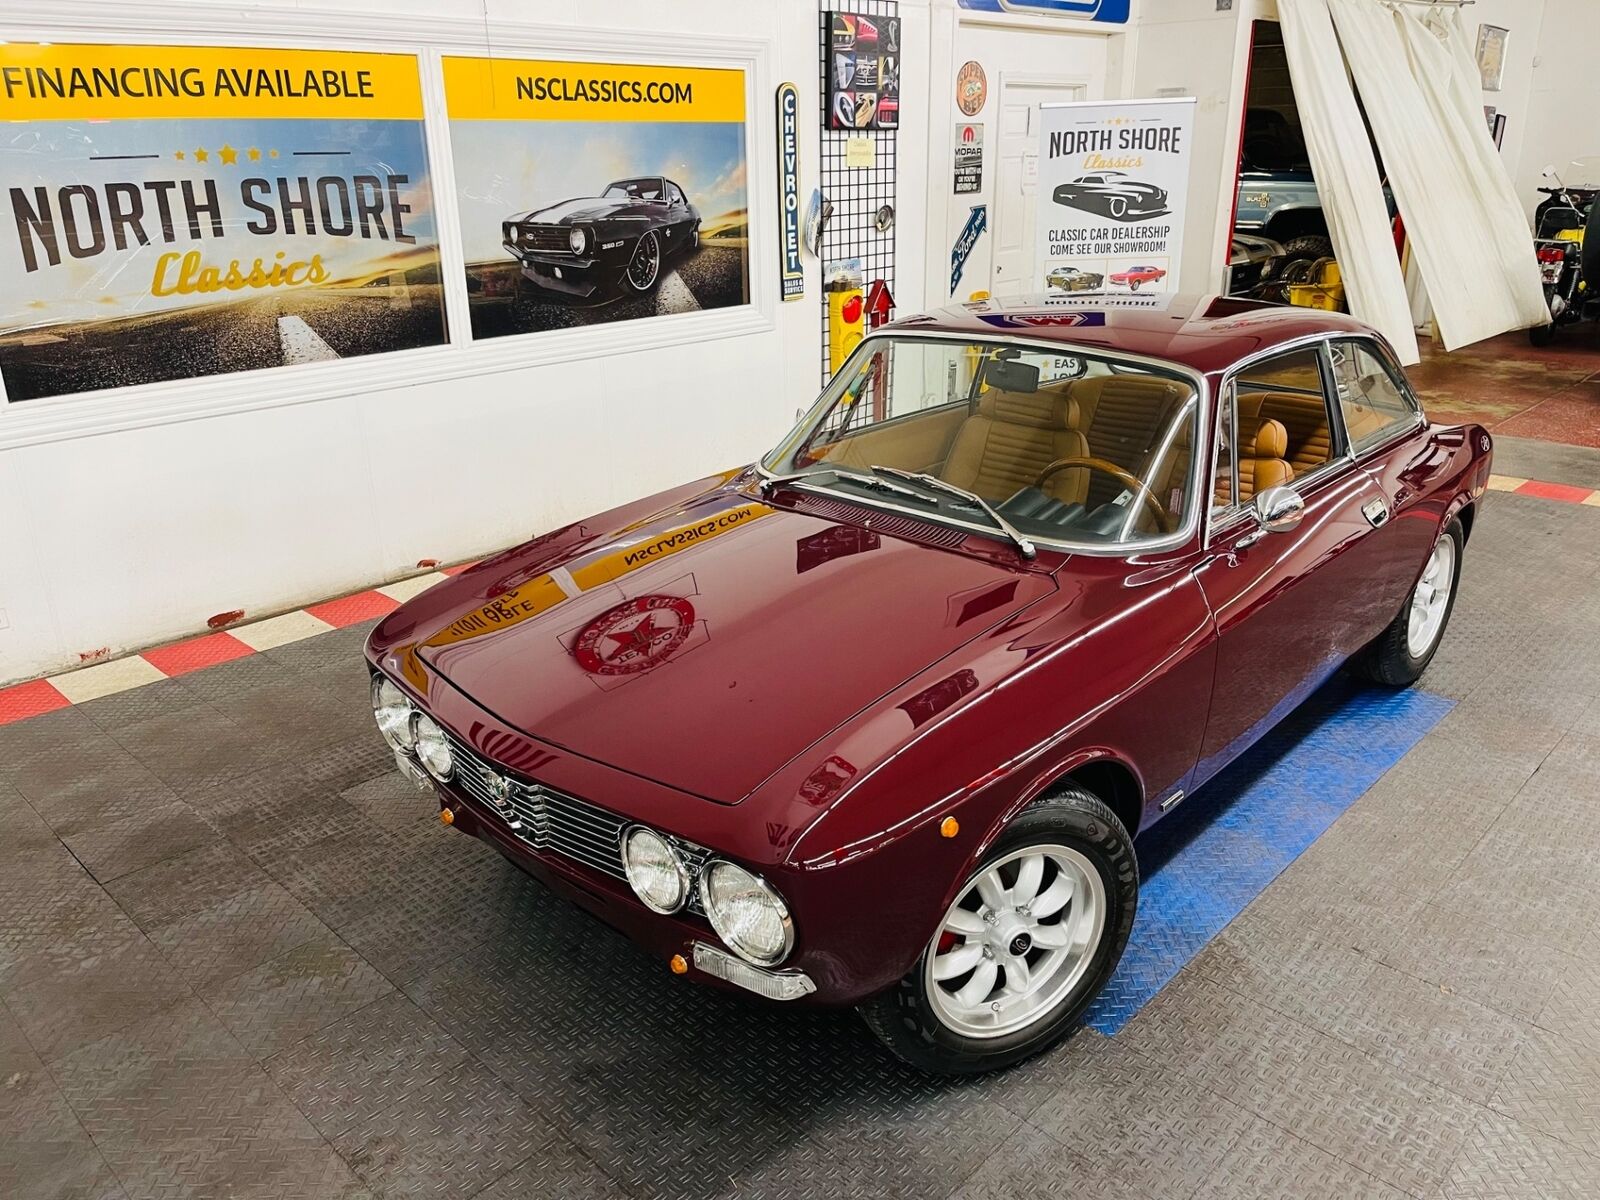 1972 Alfa Romeo 2000 Gtv Nicely Restored Italian Sports Car - See Video